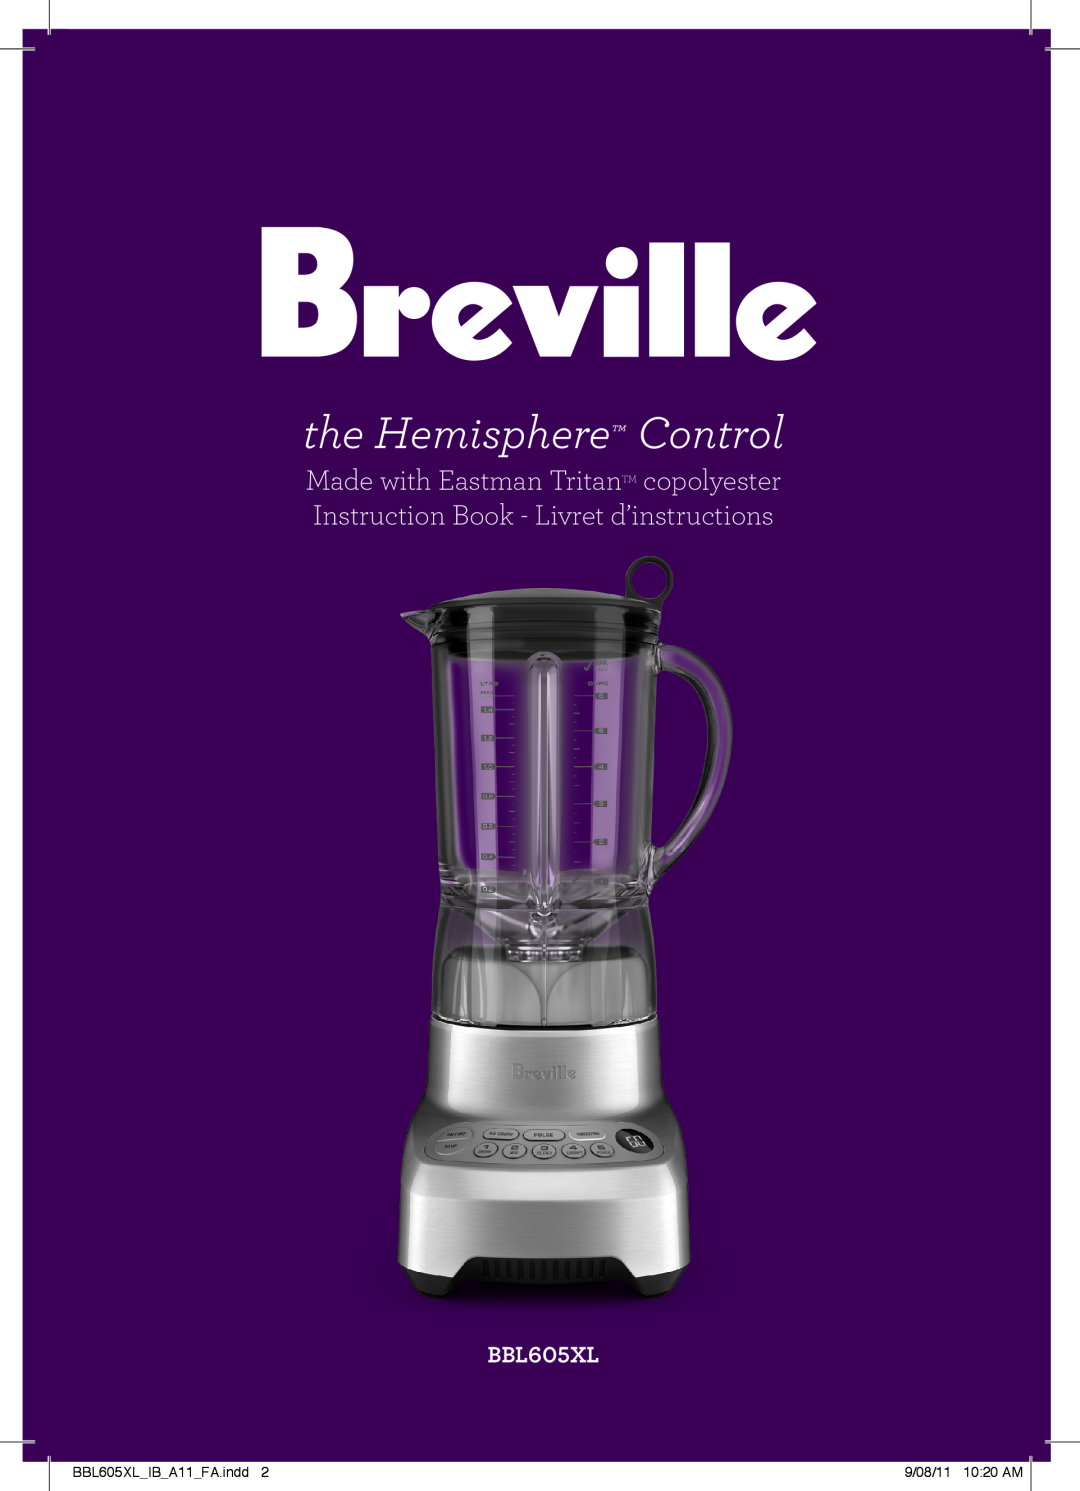 Breville manual the Hemisphere Control, BBL605XLIBA11FA.indd, 9/08/11 1020 AM 